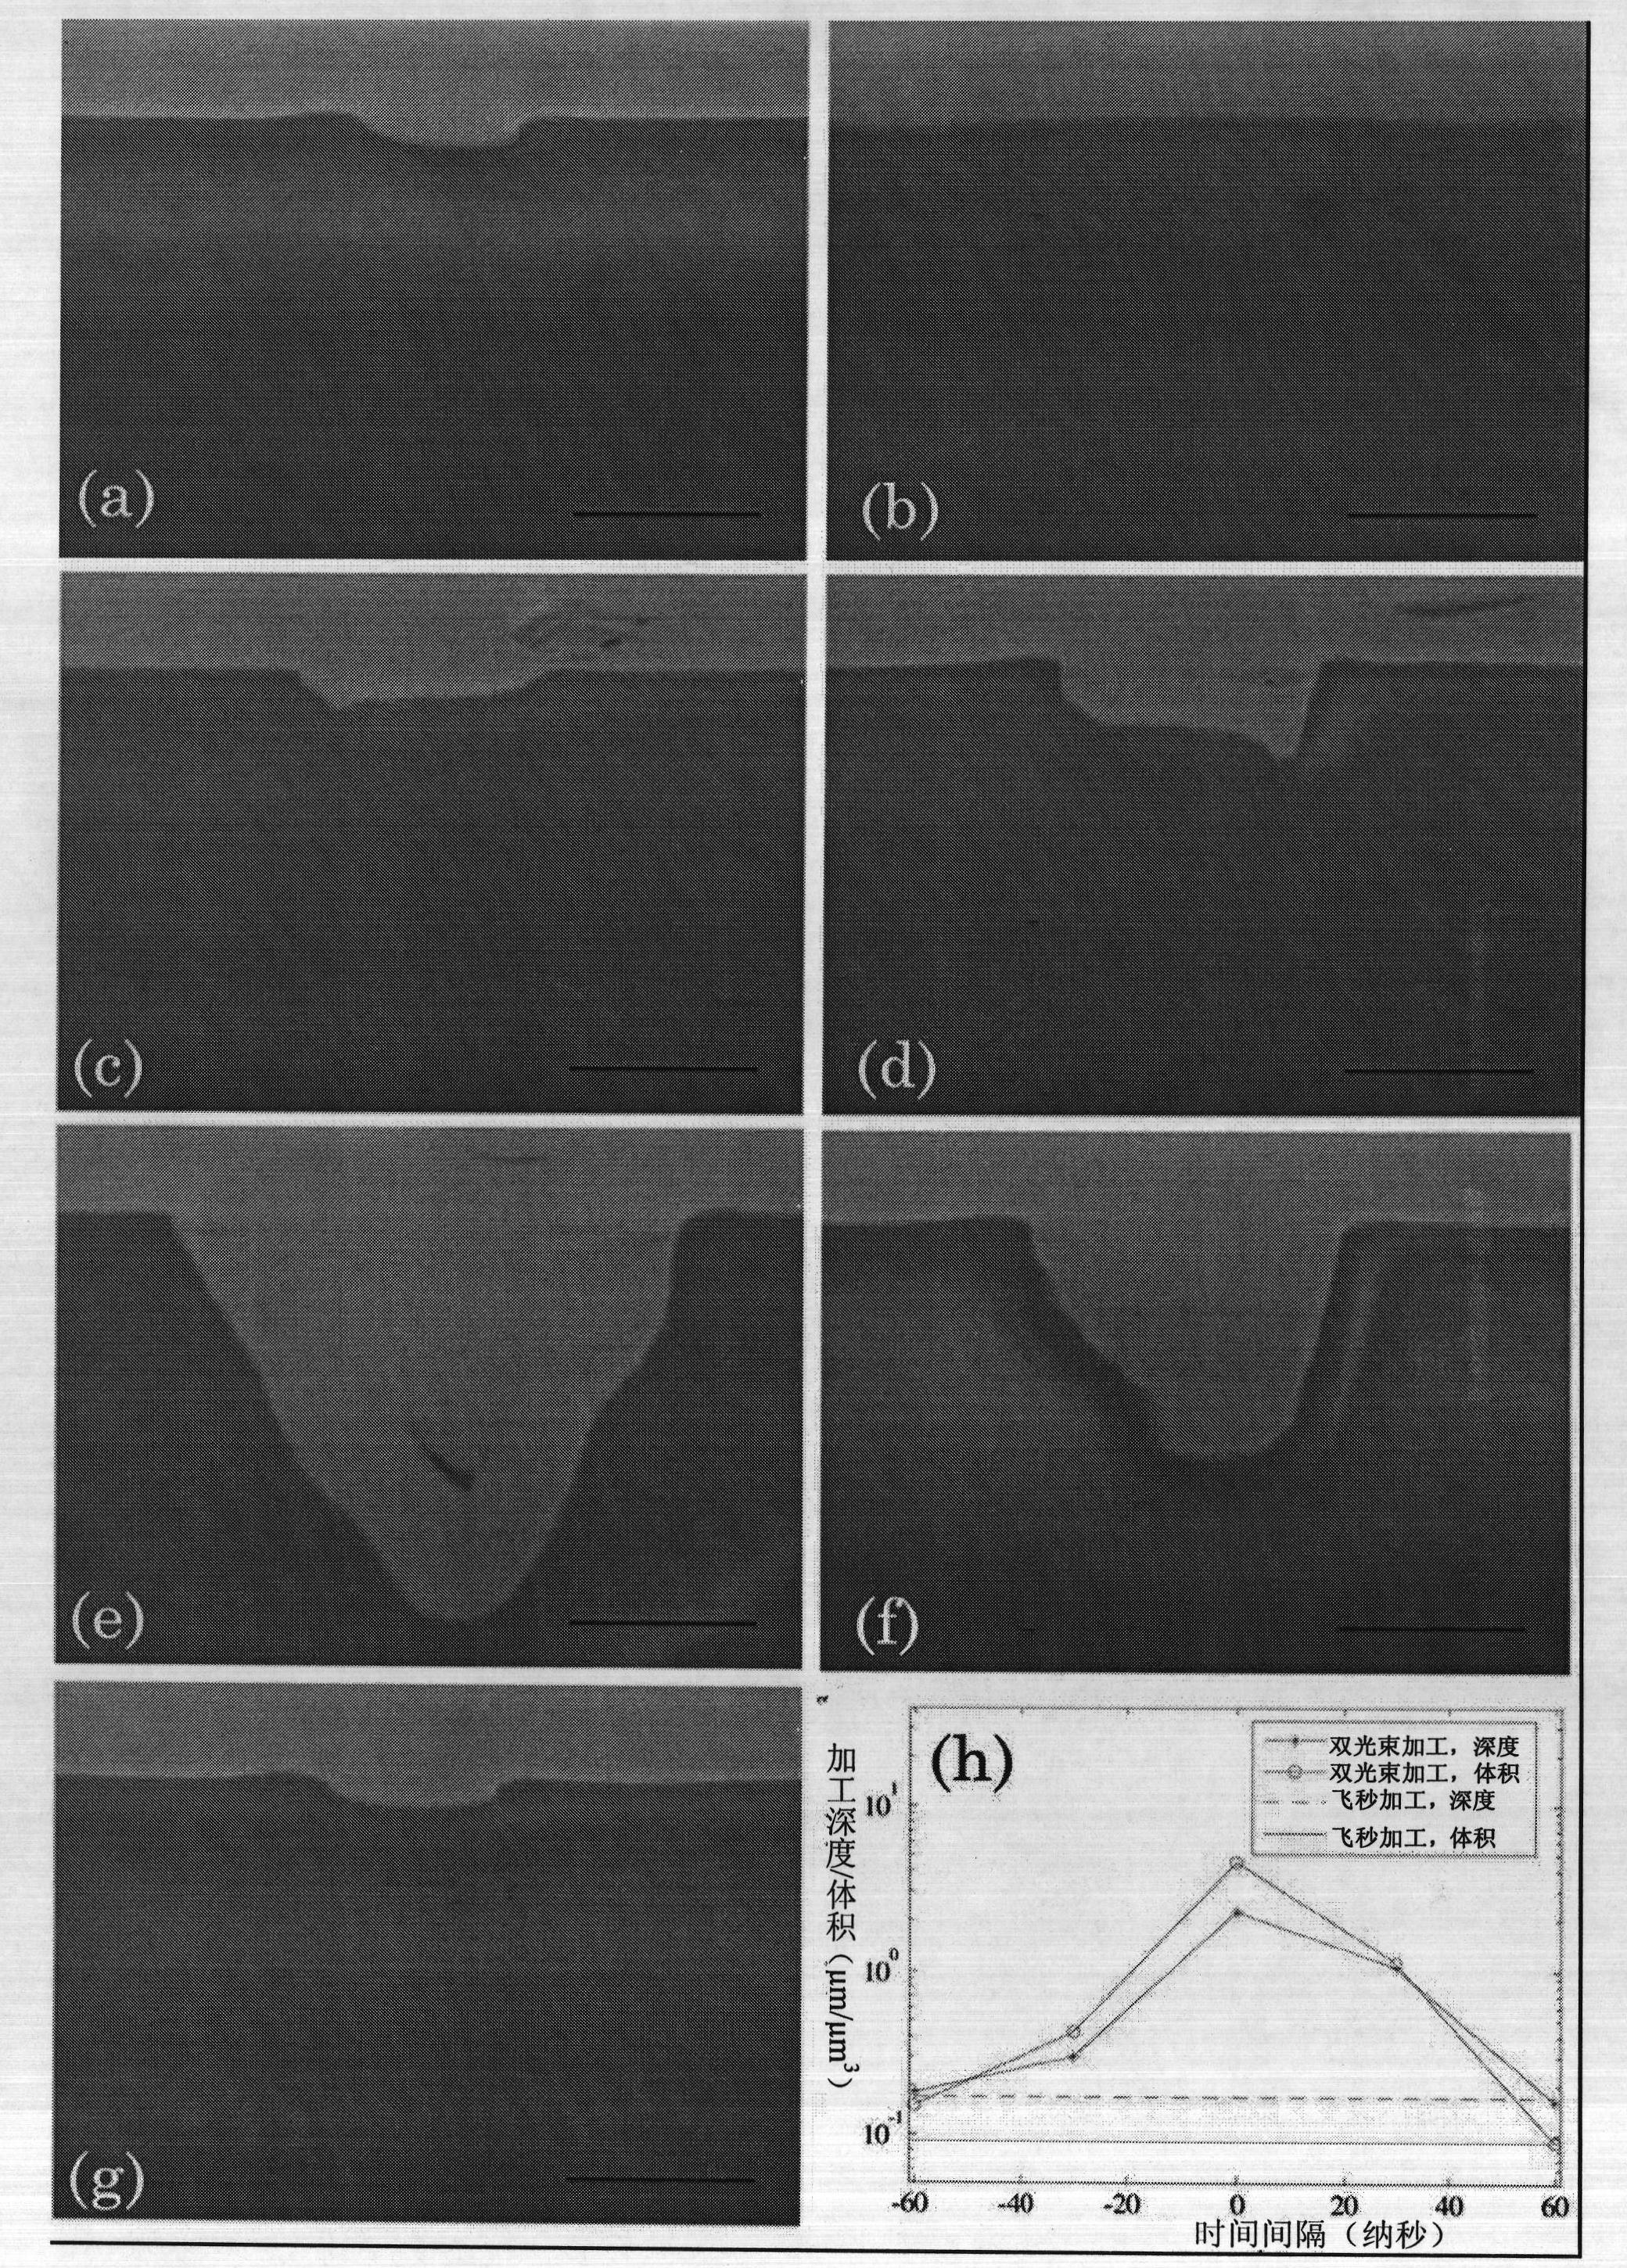 Nano-femtosecond dual-laser composite machining system